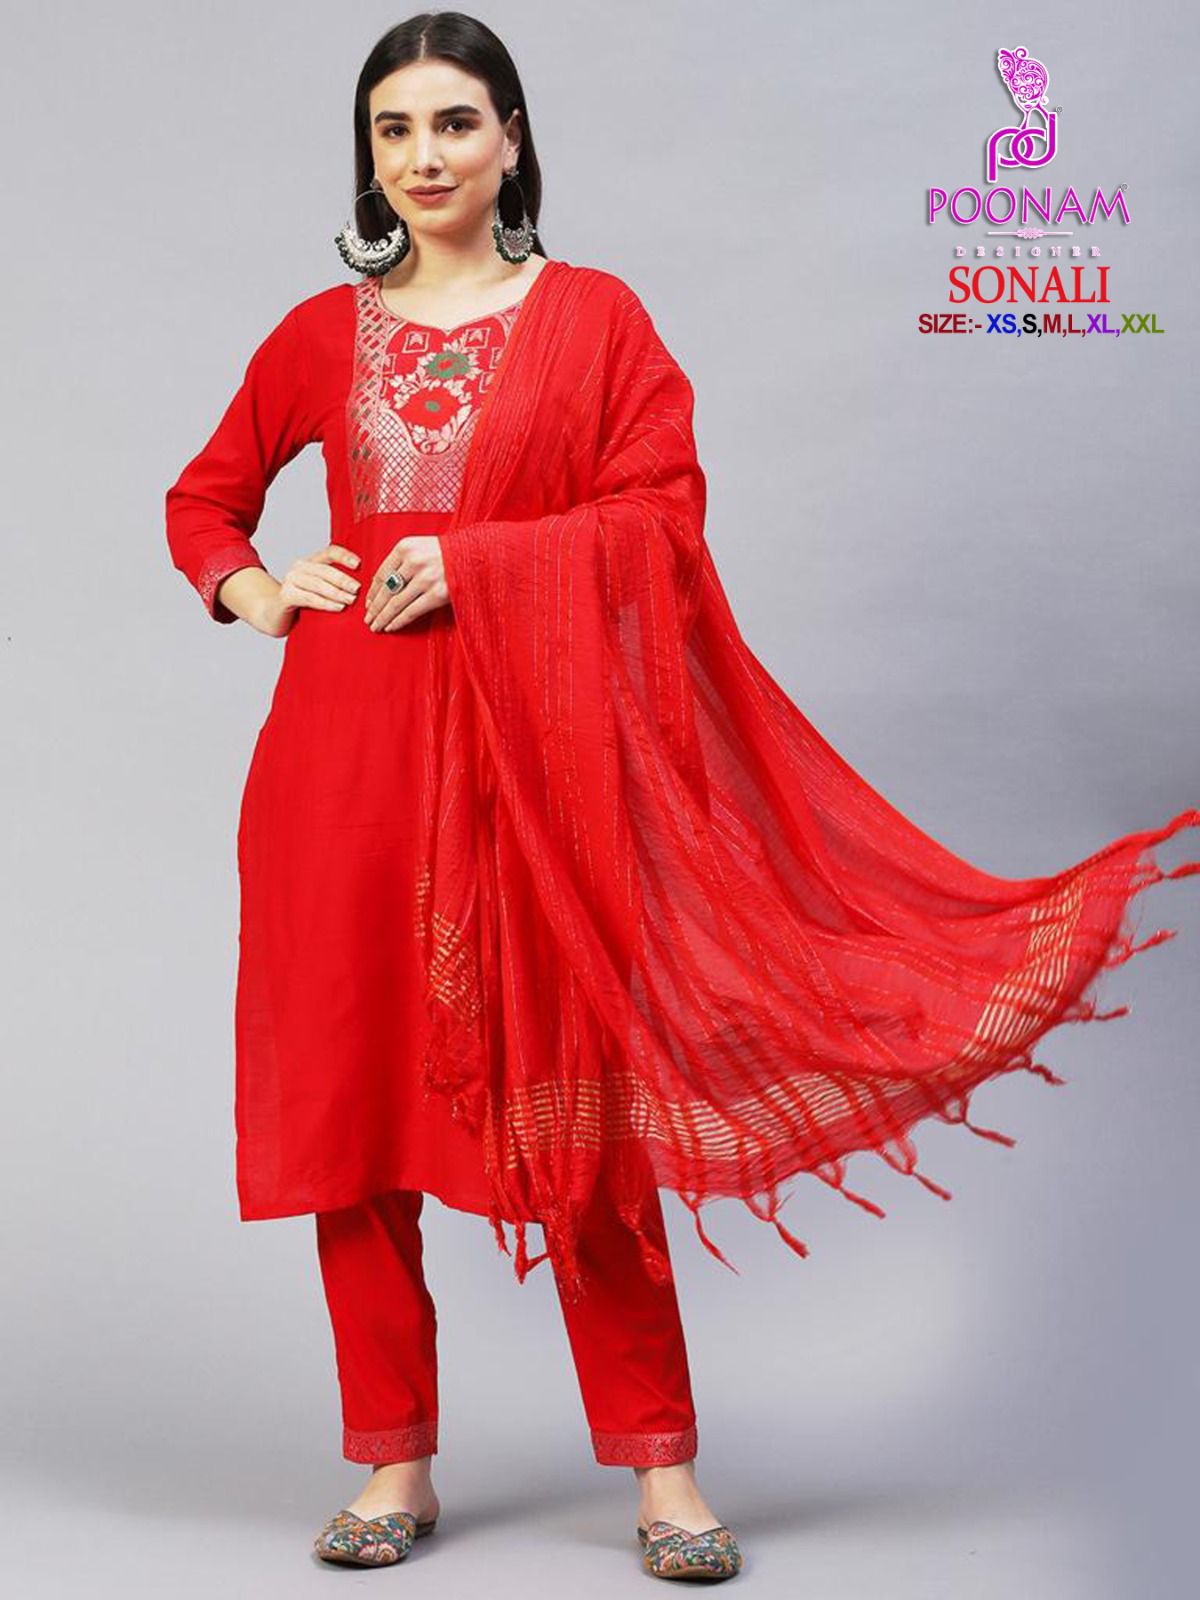 Poonam Sonali collection 3